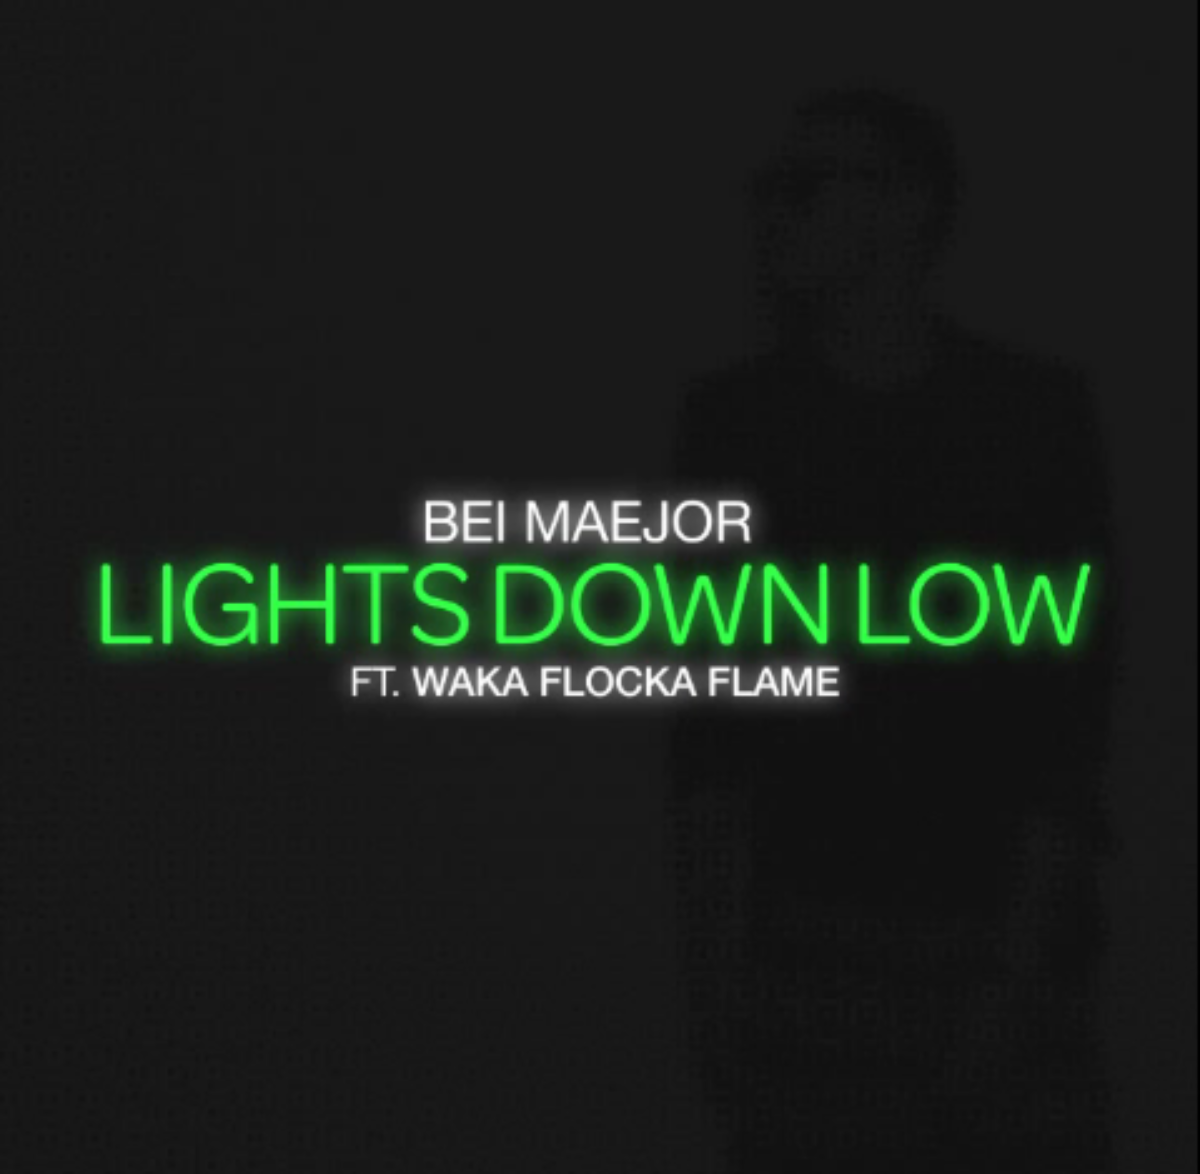 Waka flocka flame lights down low. Light down Low bei Maejor обложка. Maejor Lights down Low. Maejor Lights down Low обложка. Lights down Low Waka Flocka Flame.